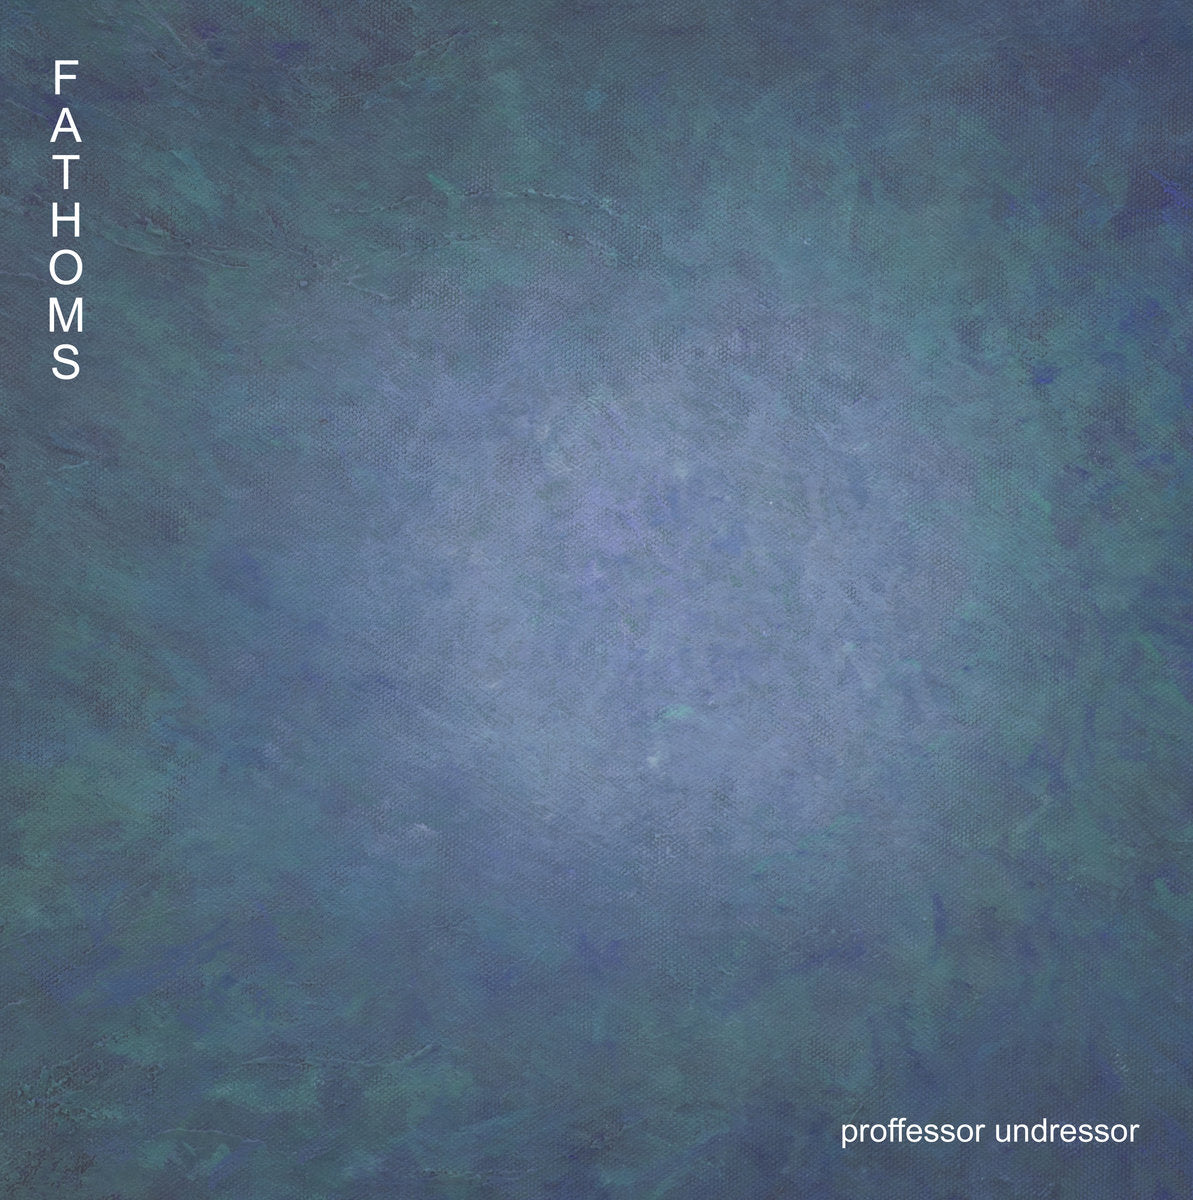 Proffessor Undressor/Fathoms (Black Vinyl) [LP]